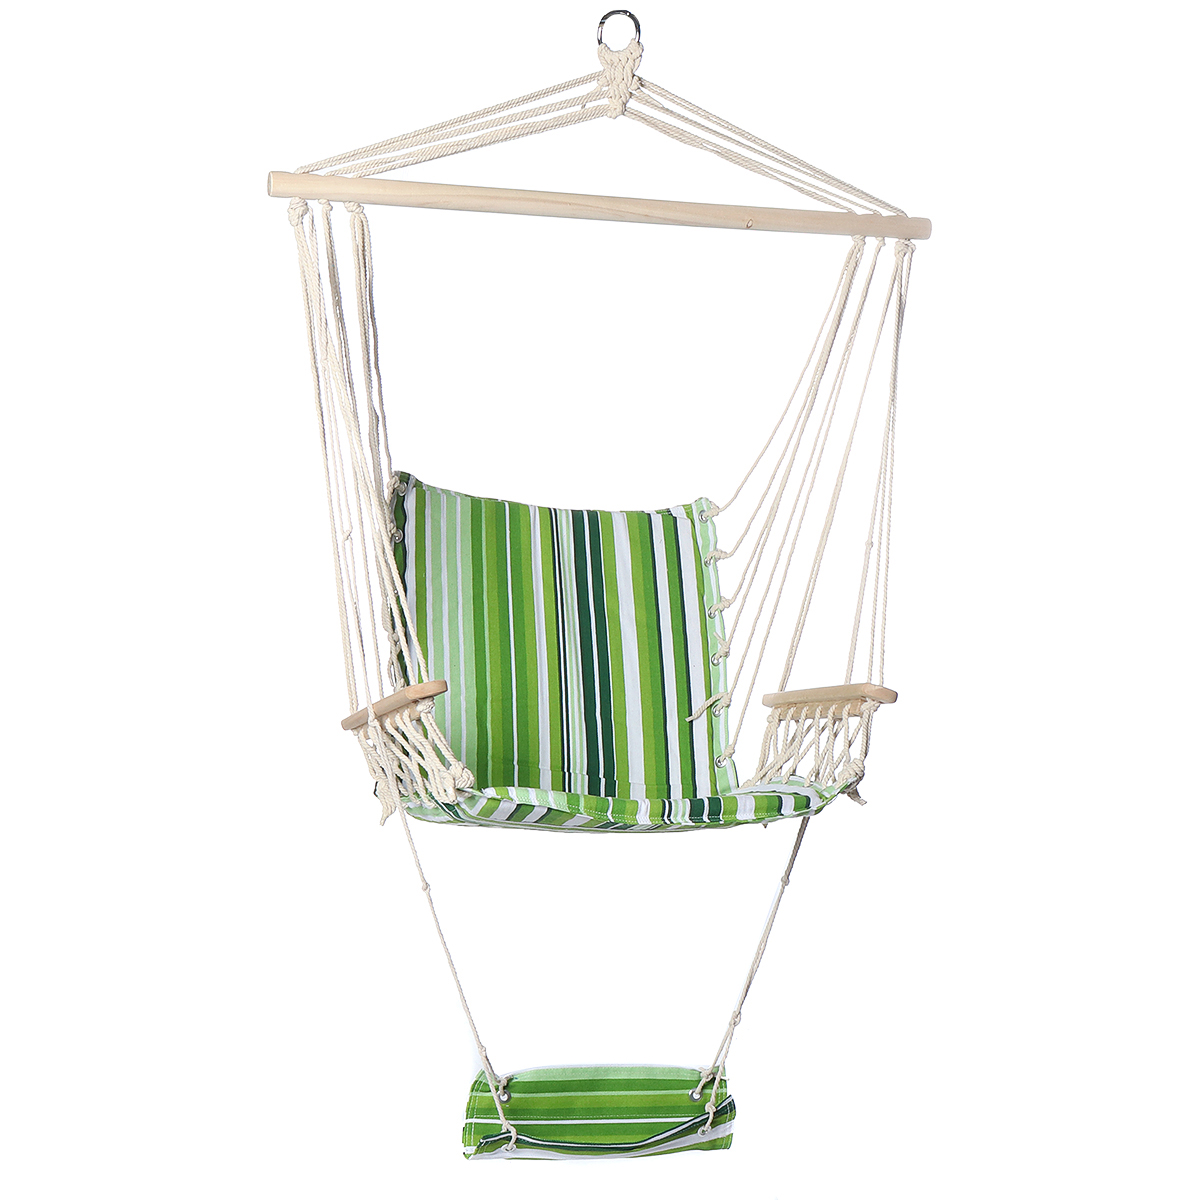 Cotton-Hammock-Chair-Comfortable-Hanging-Swing-Seat-Swing-Cushion-Outdoor-Indoor-Garden-Max-Load-150-1741982-5